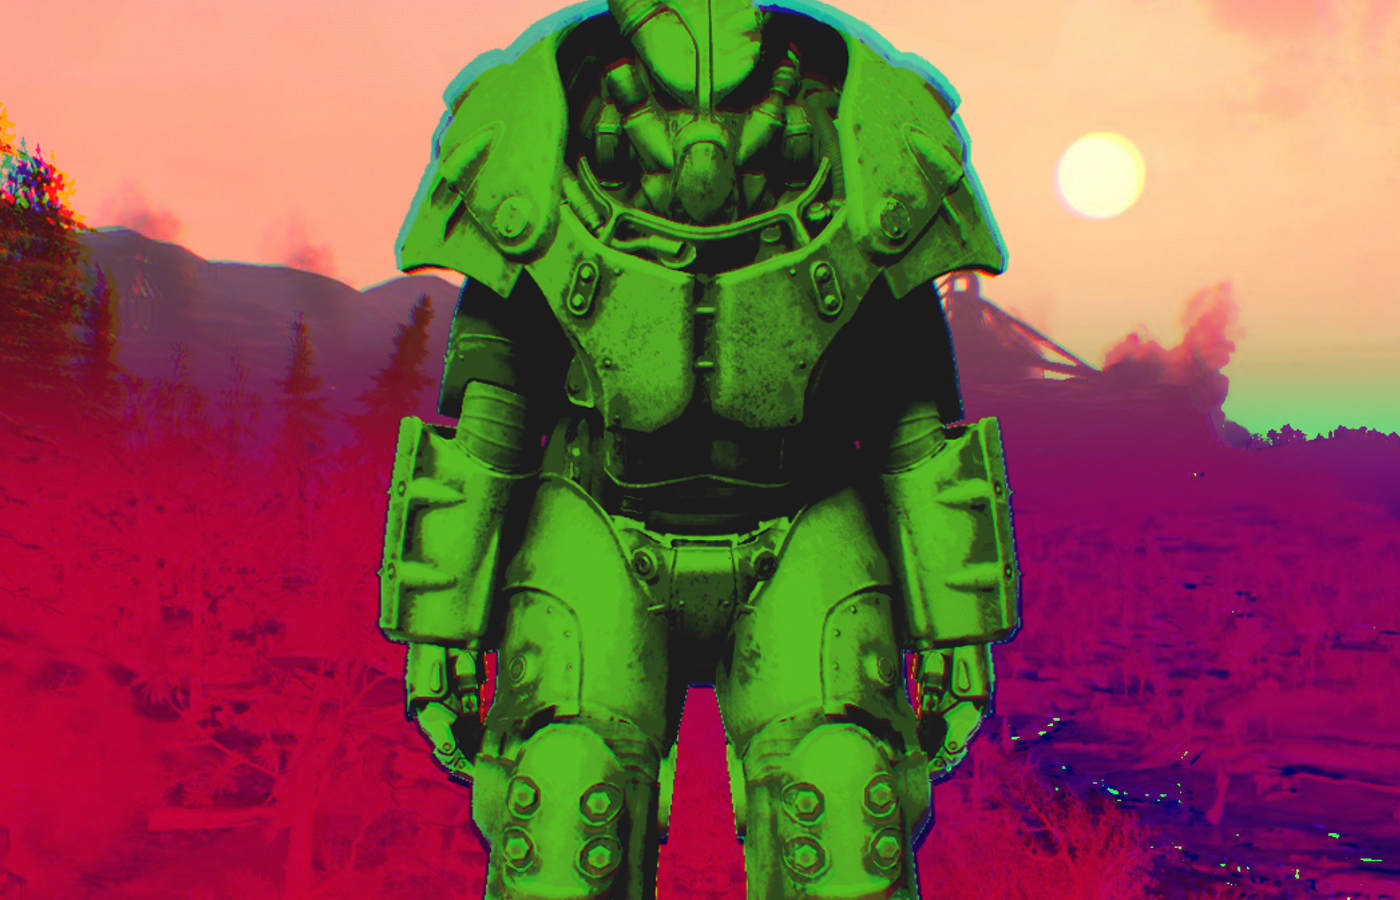 Pop art image of Fallout's Enclave power armor